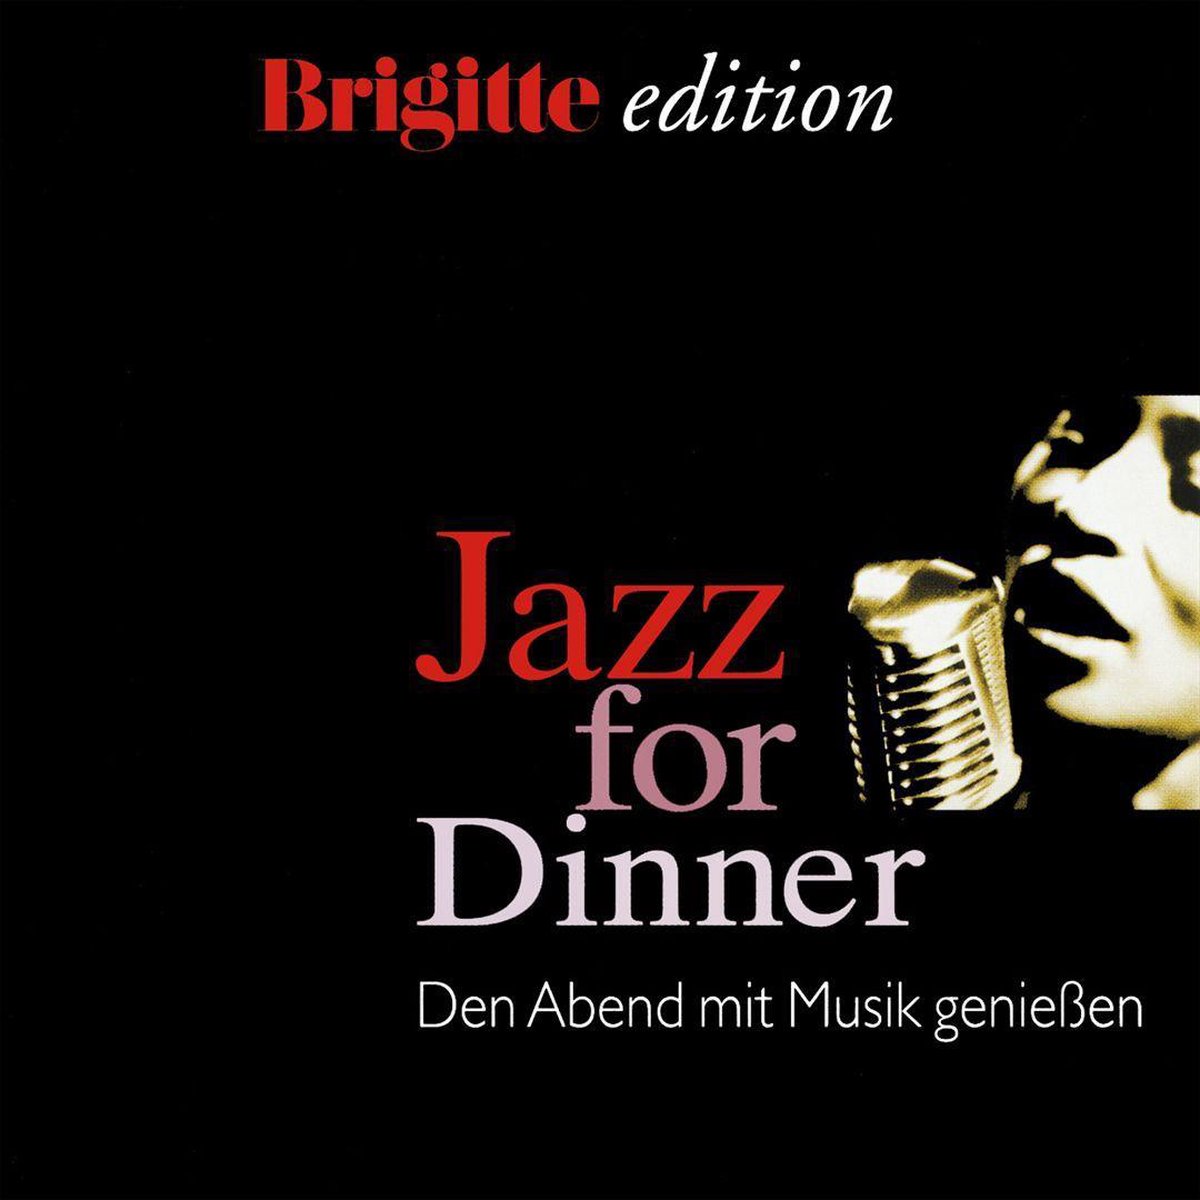 Afbeelding van product Jazz for Dinner, Vol. 1: Brigitte Edition  - various artists